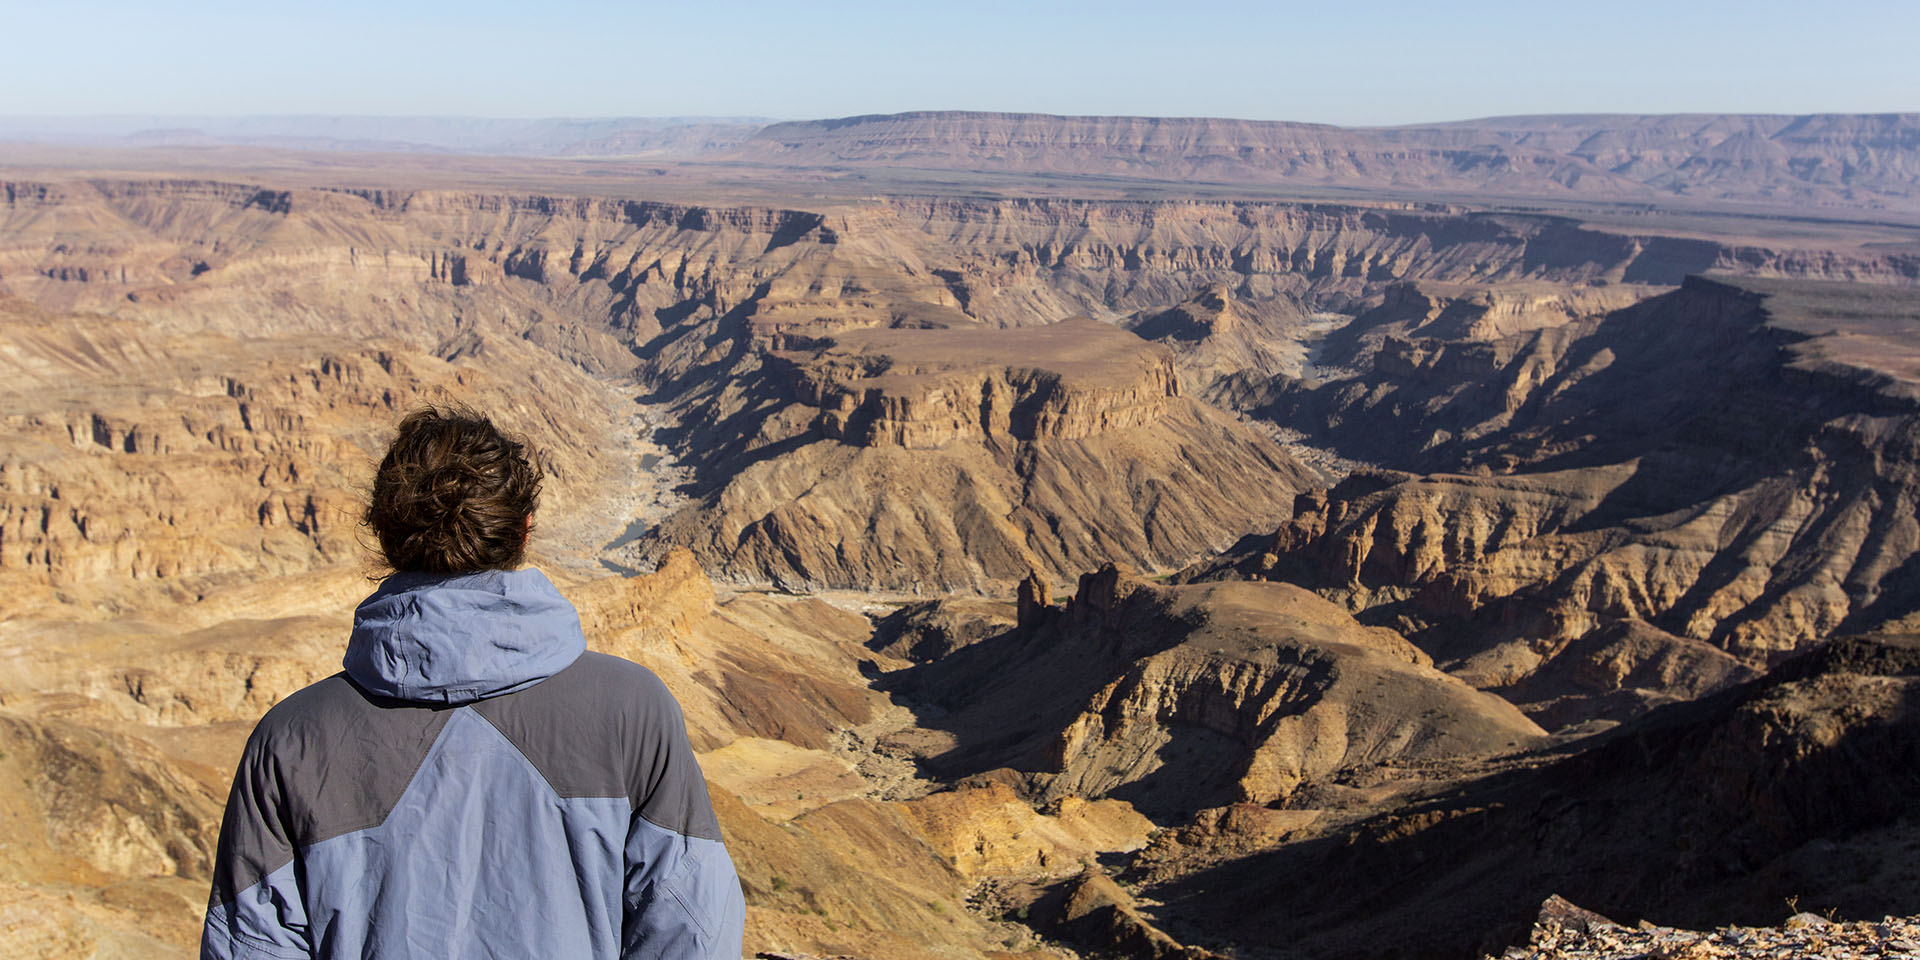 Man overlooking Fish River Canyon, Namibia